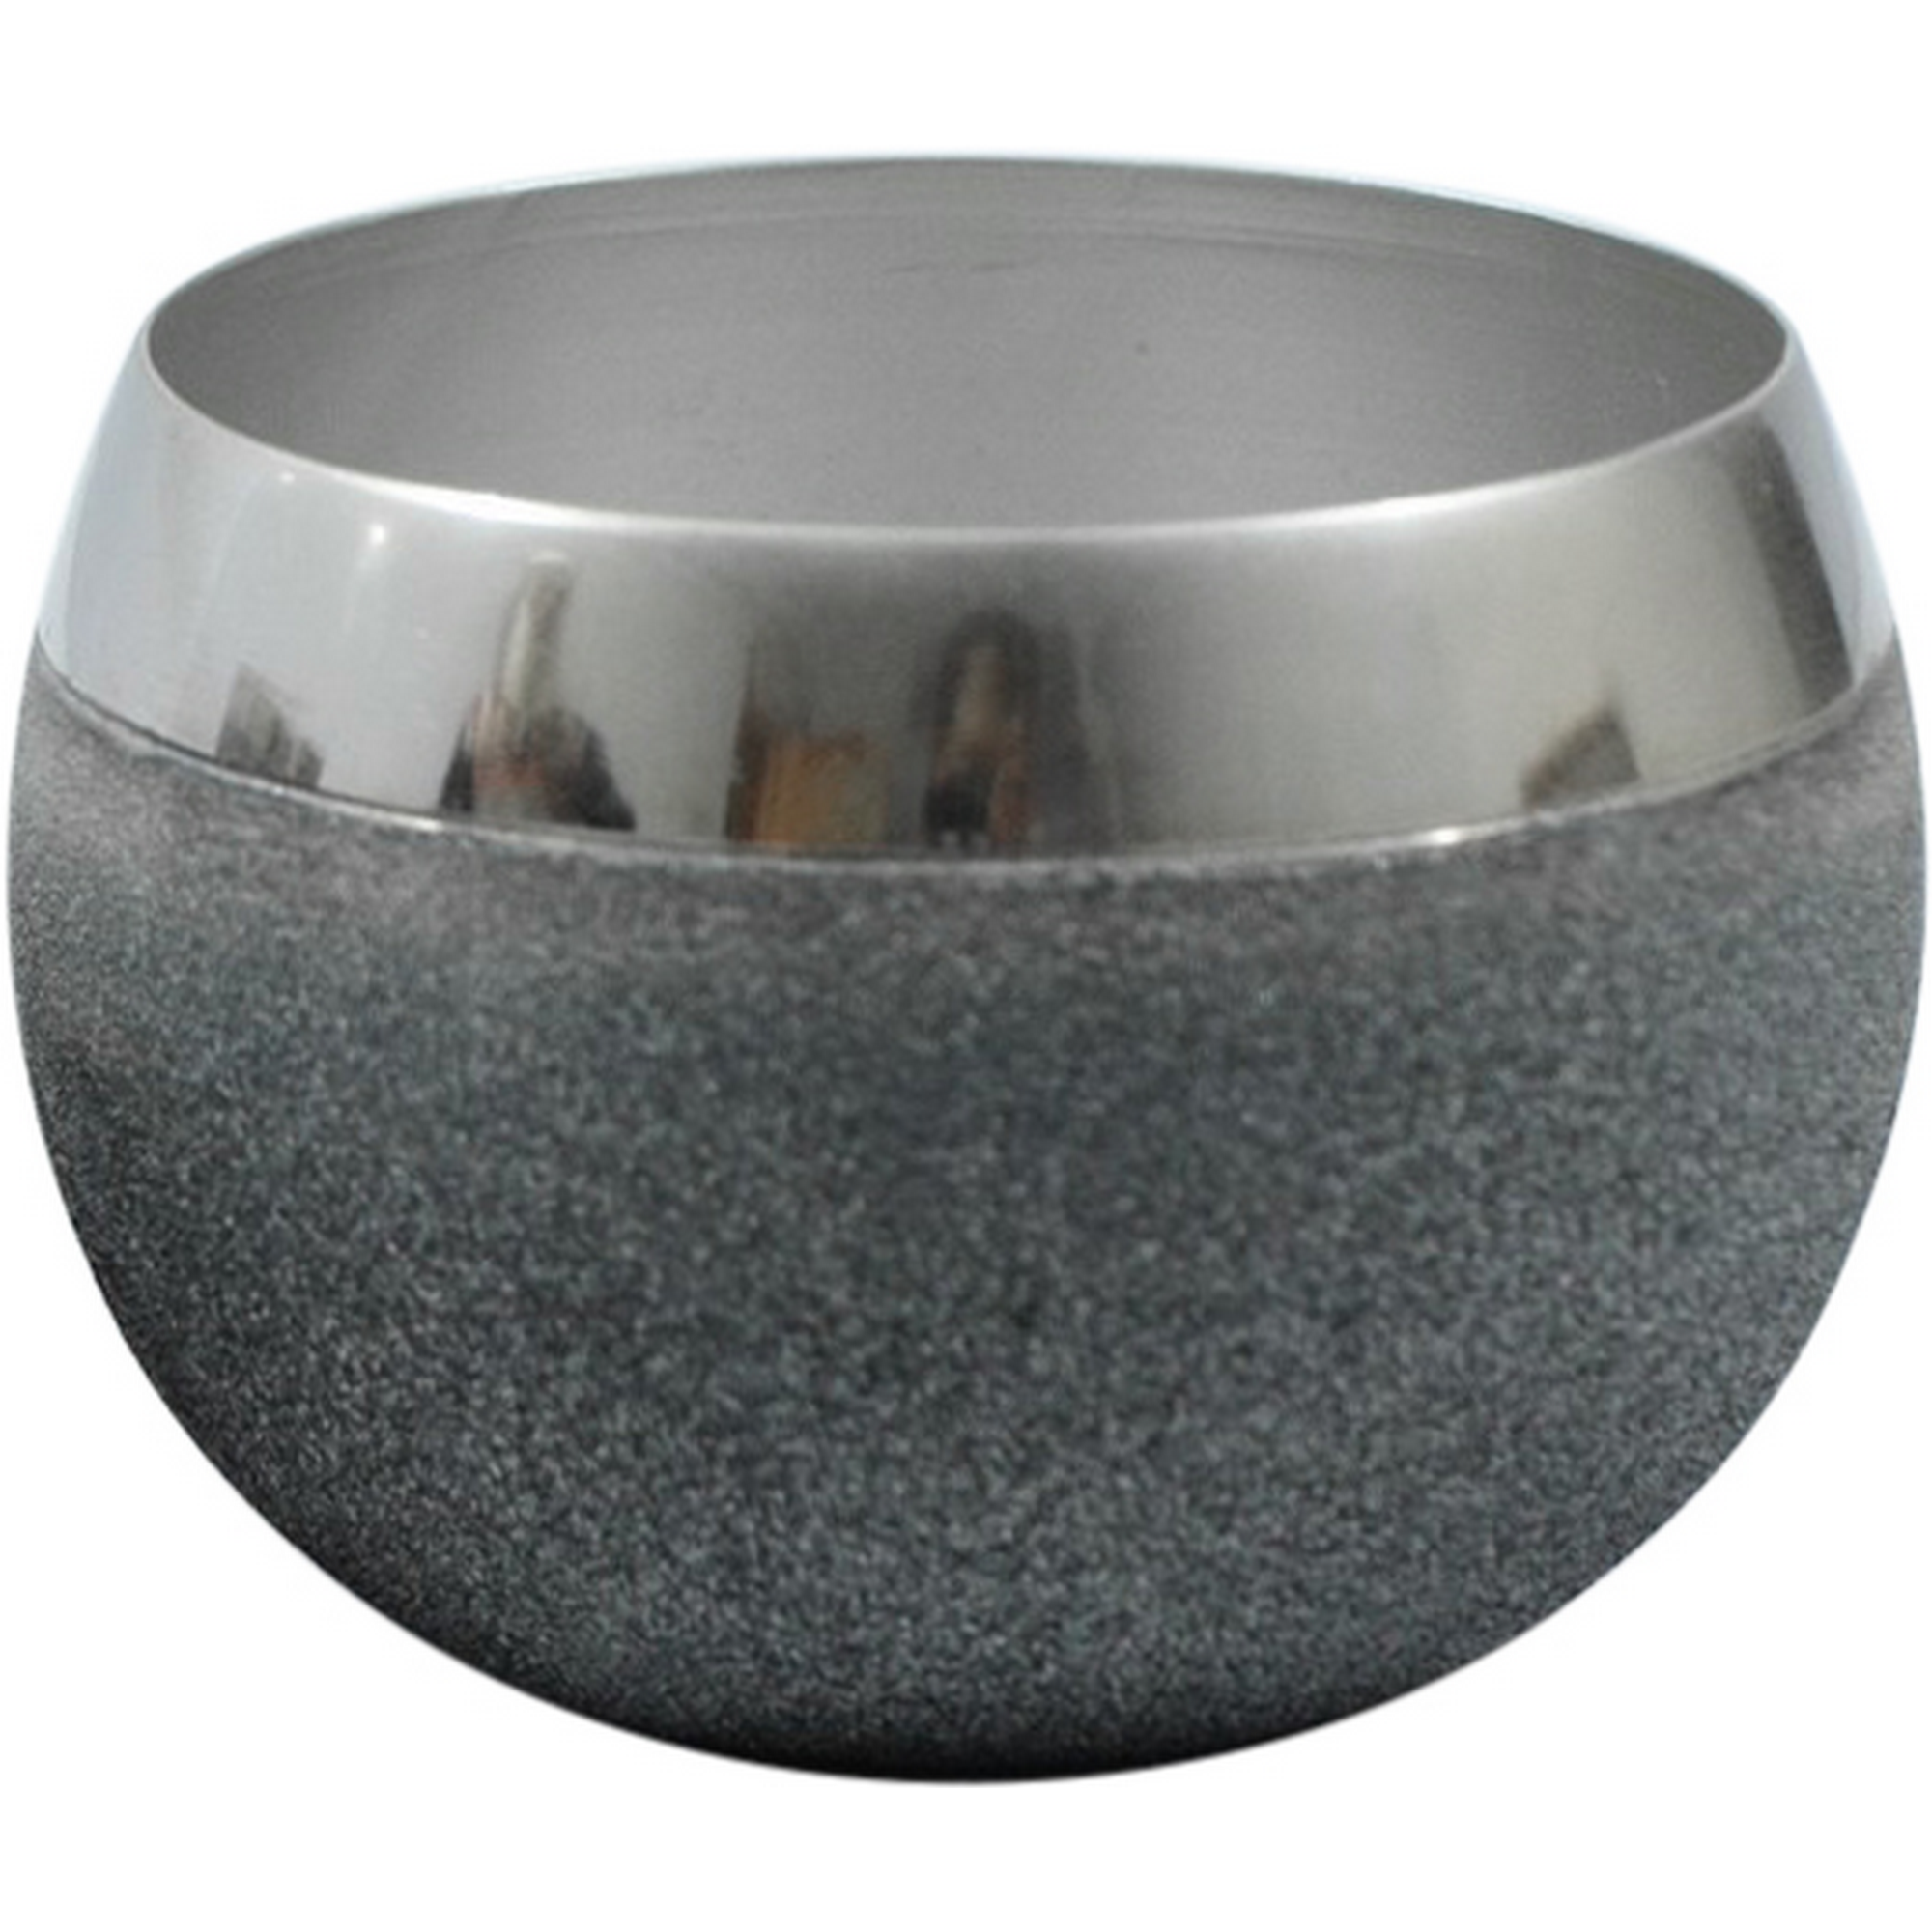 Metallübertopf lackiert grau mit Silberrand 15 x 17 x 12 cm + product picture